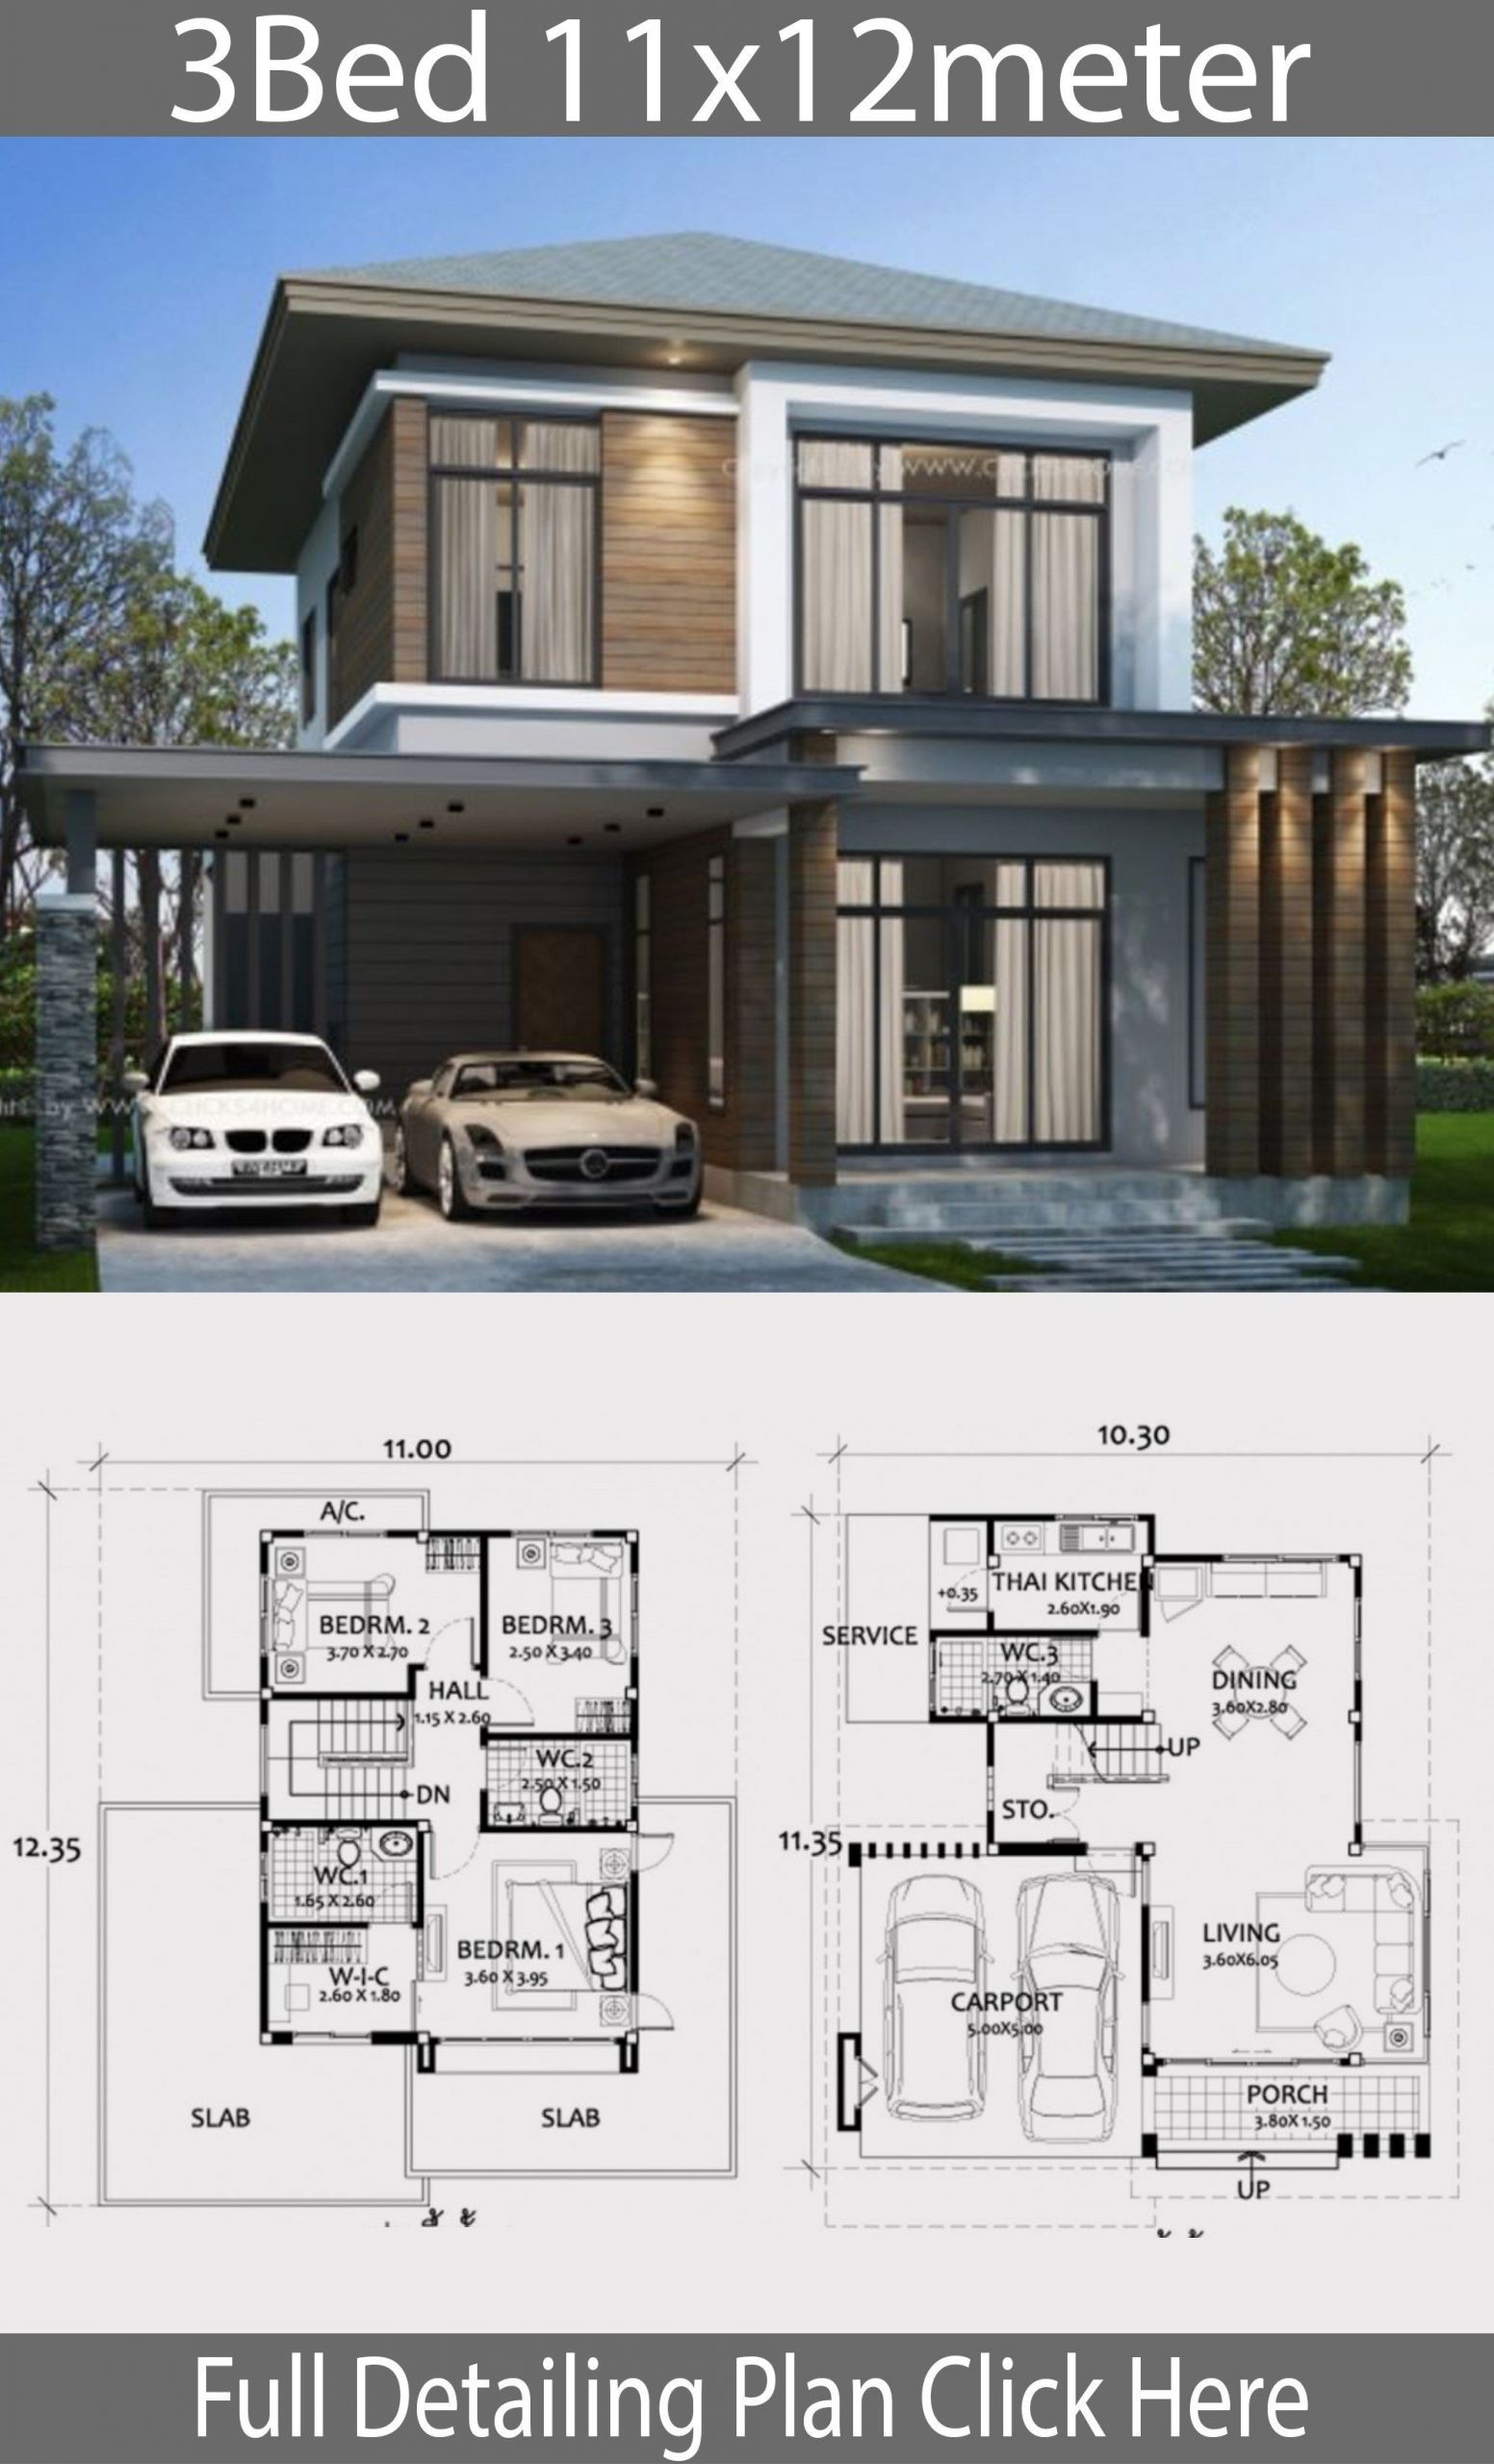 Gartendesign Modern Inspirierend Home Design Plan 11x12m with 3 Bedrooms